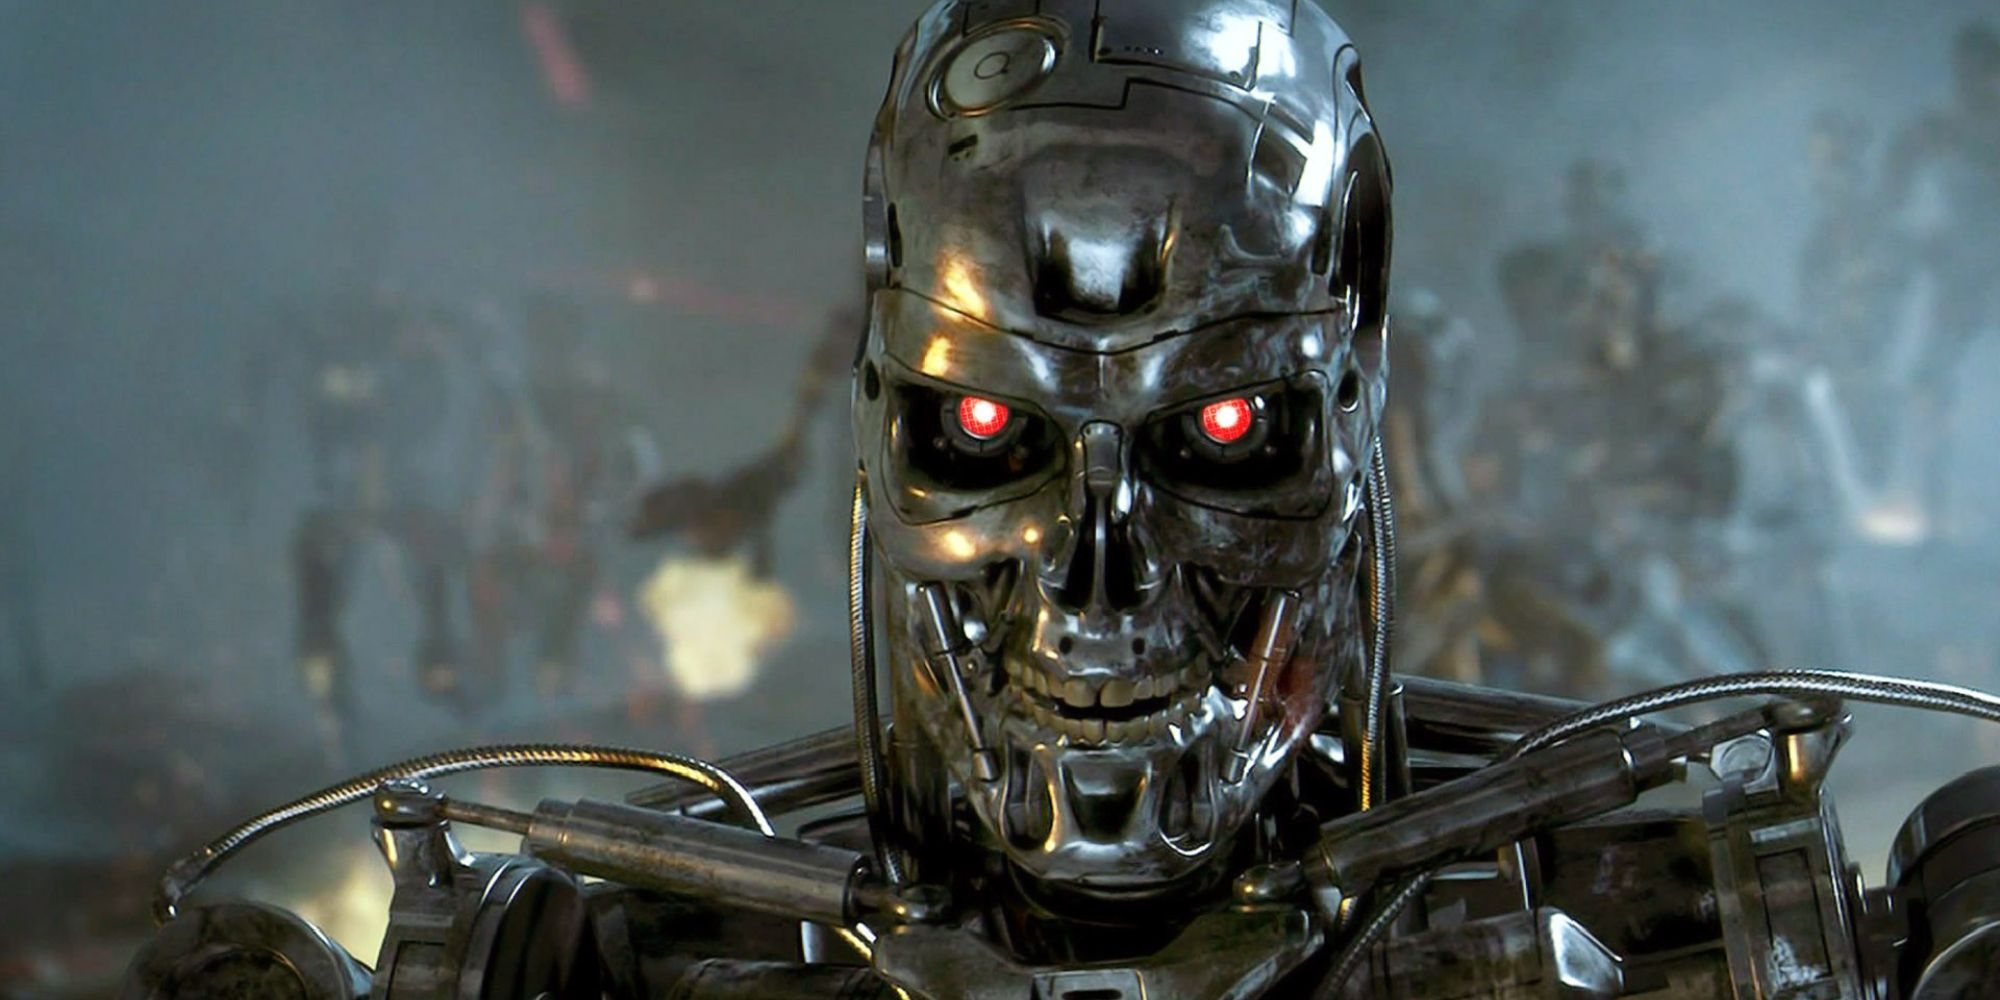 Cyborg in The Terminator